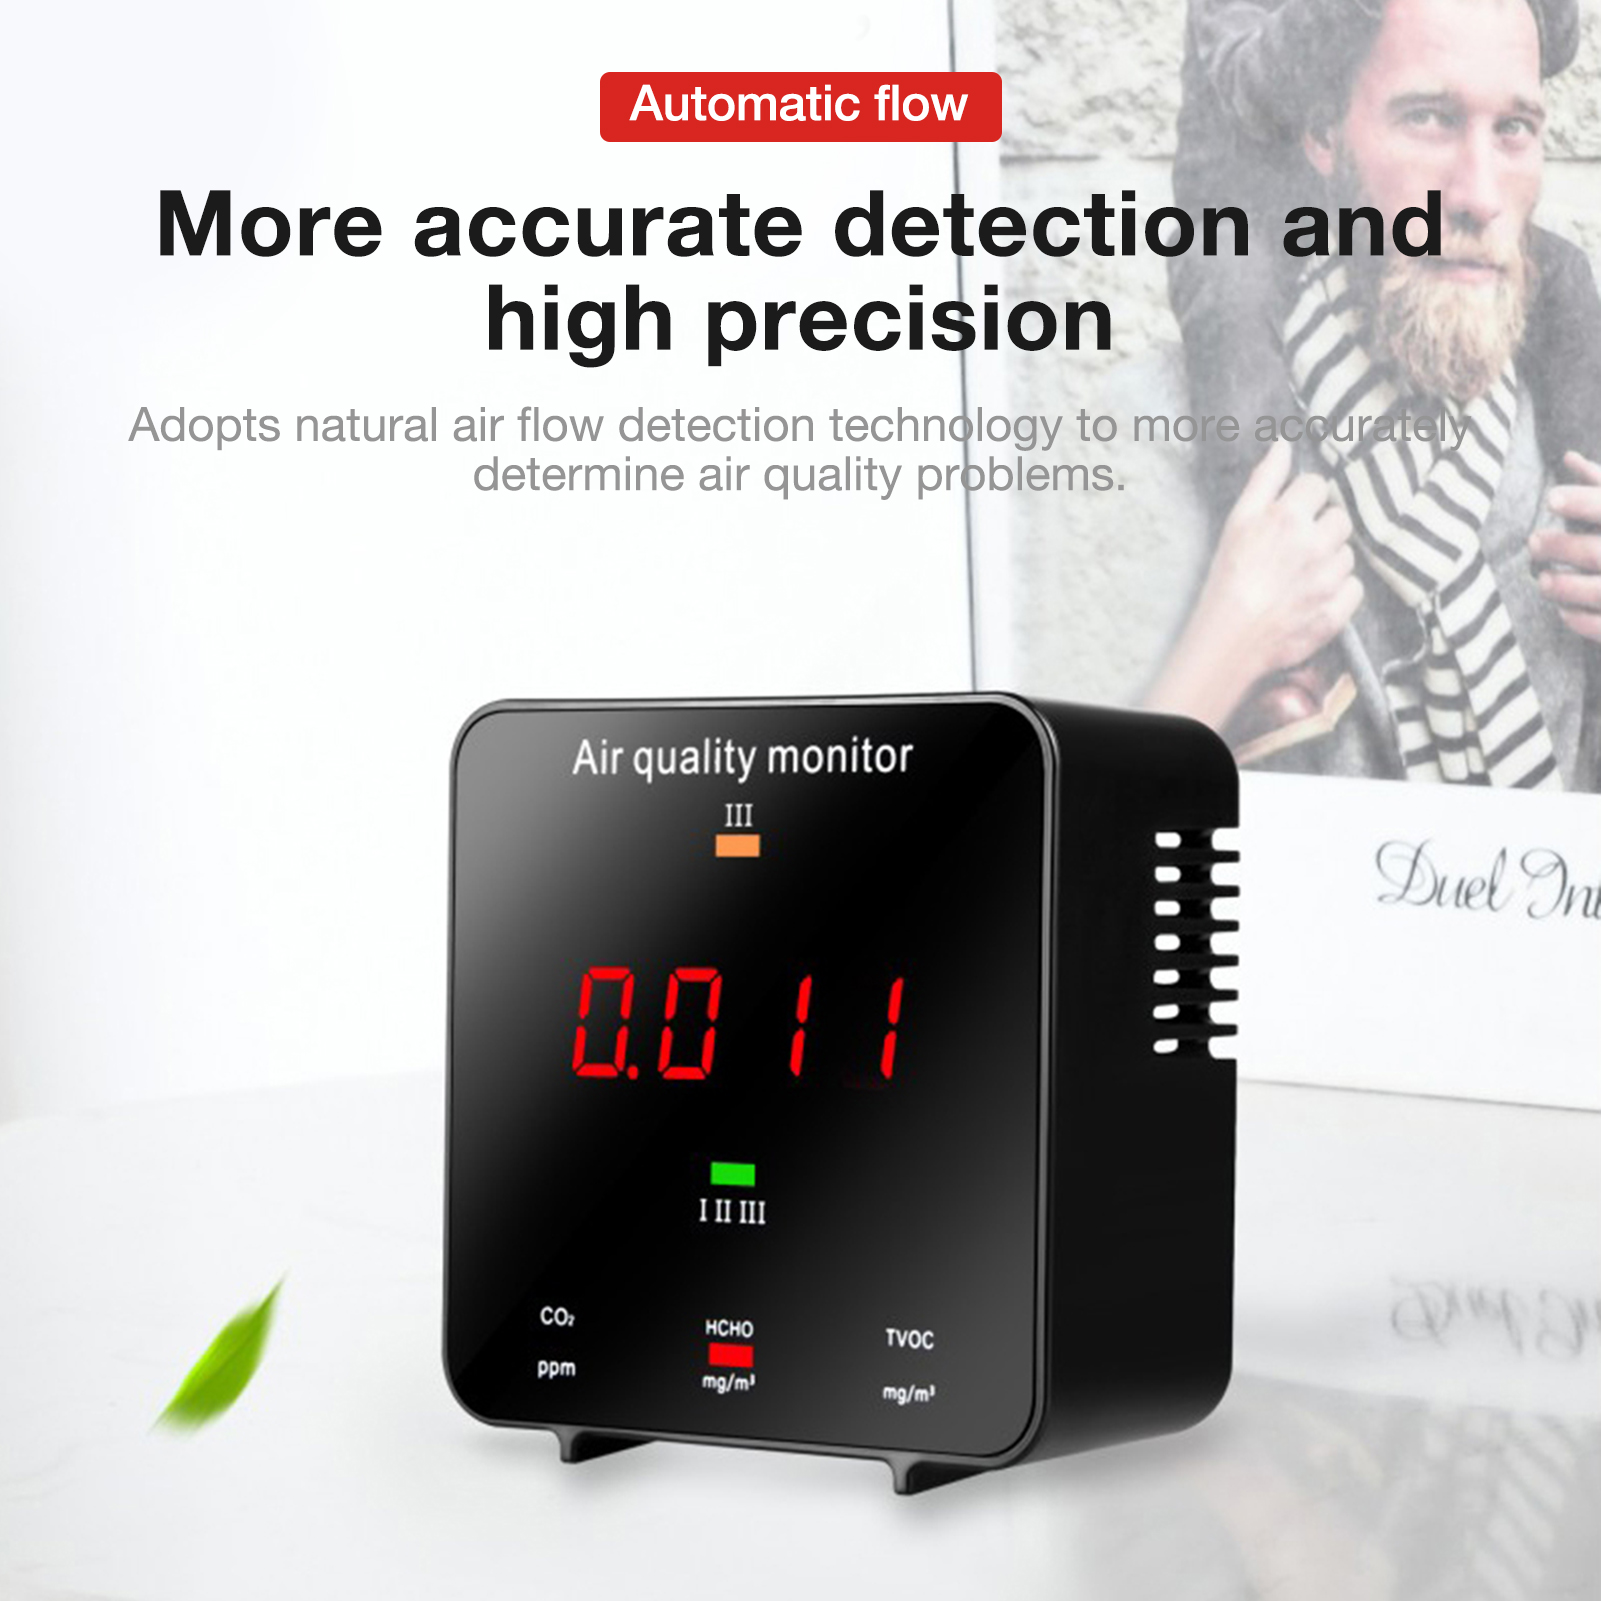 CO2-Meter-Digital-Temperature-Humidity-Sensor-Tester-Air-Quality-Monitor-Carbon-Dioxide-TVOC-Formald-1824199-2